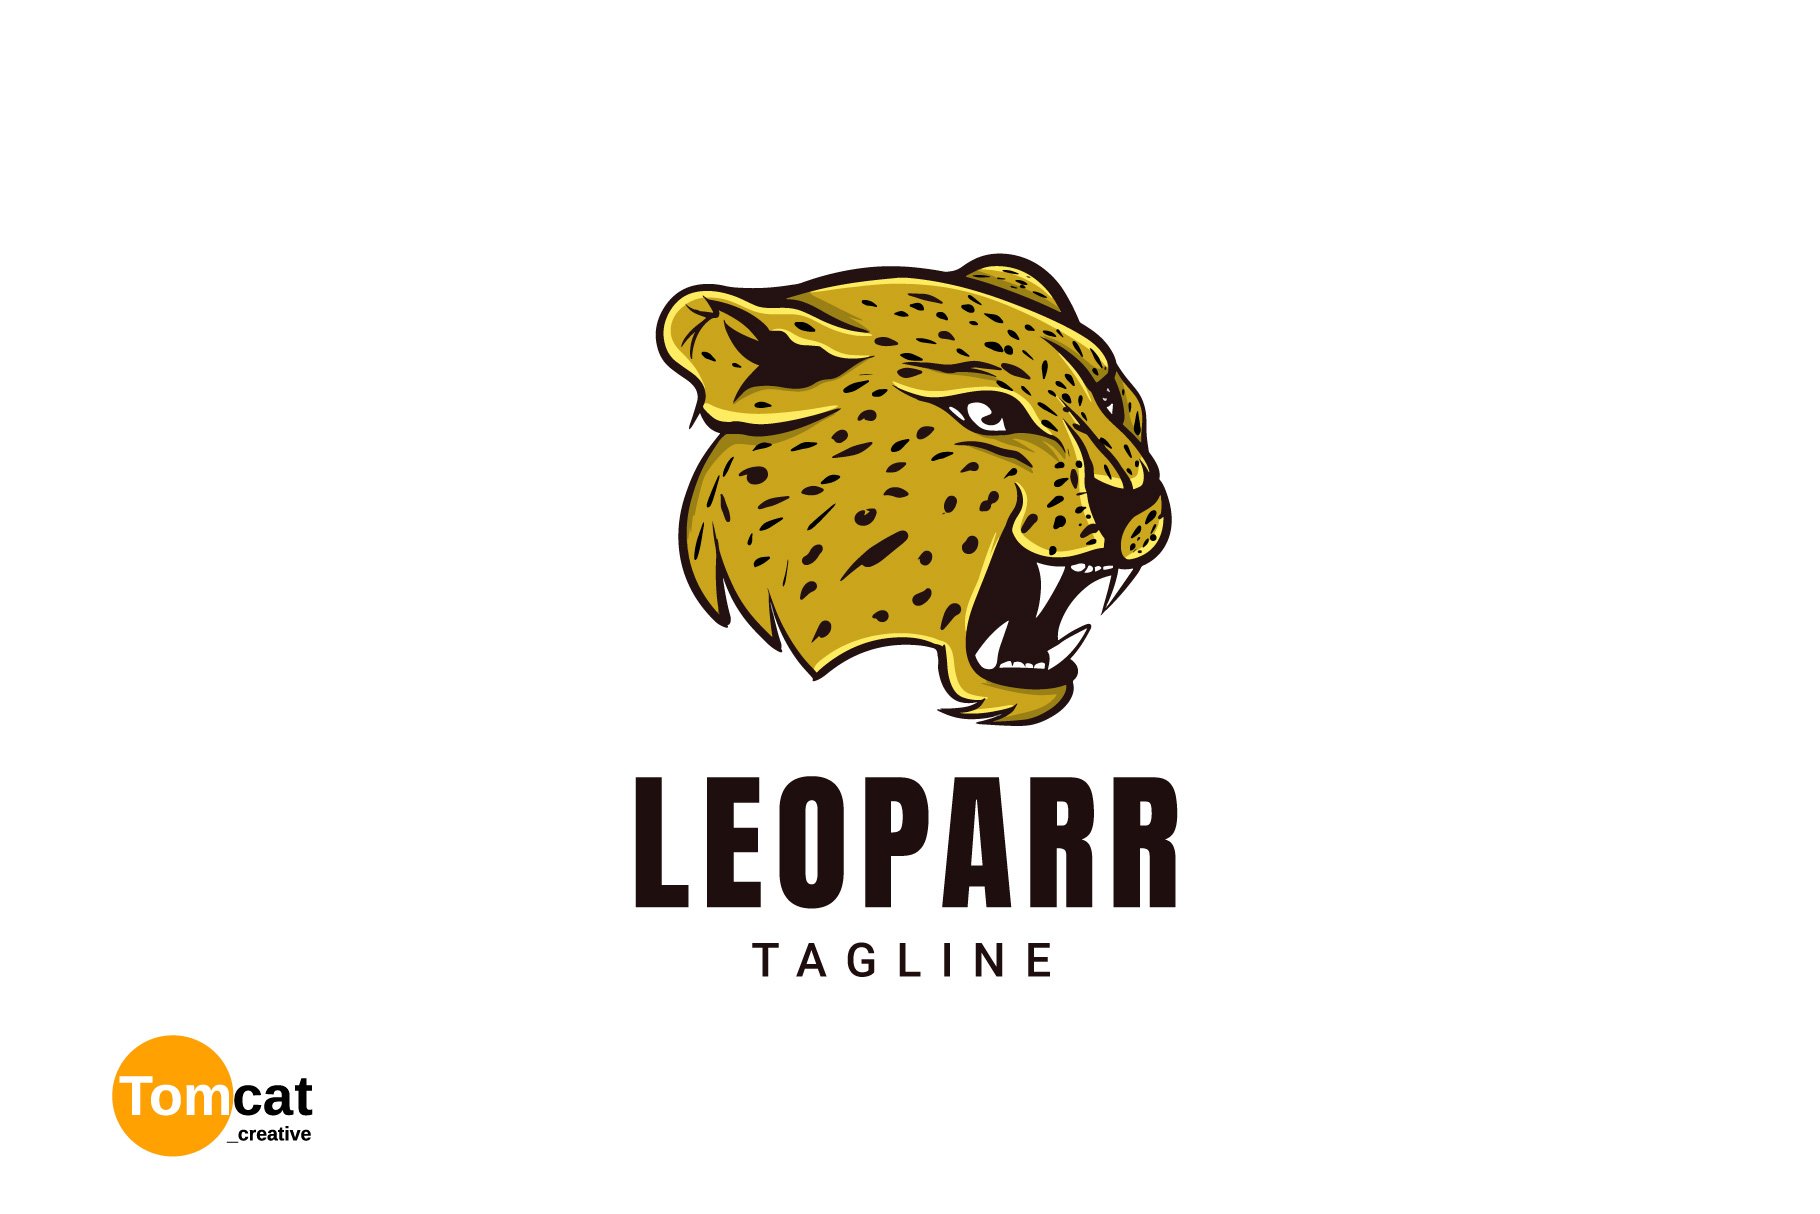 Leopard Head Logo Illustration cover image.